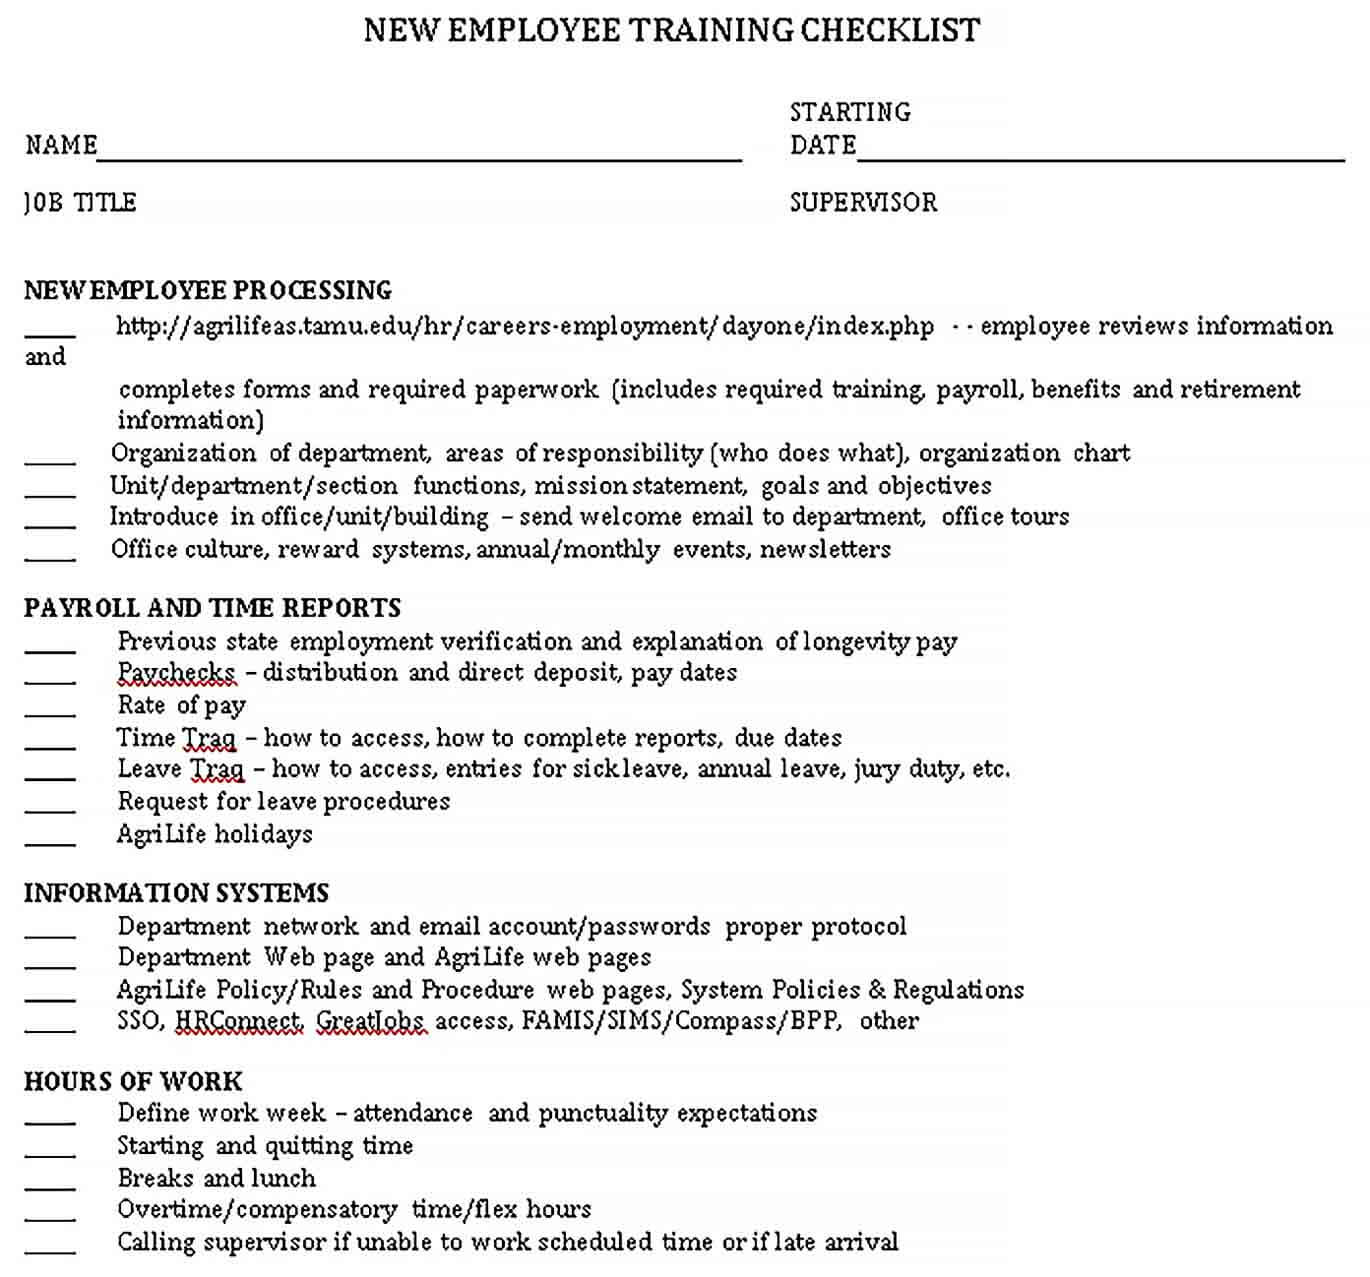 Sample New Employee Training Checklist Template